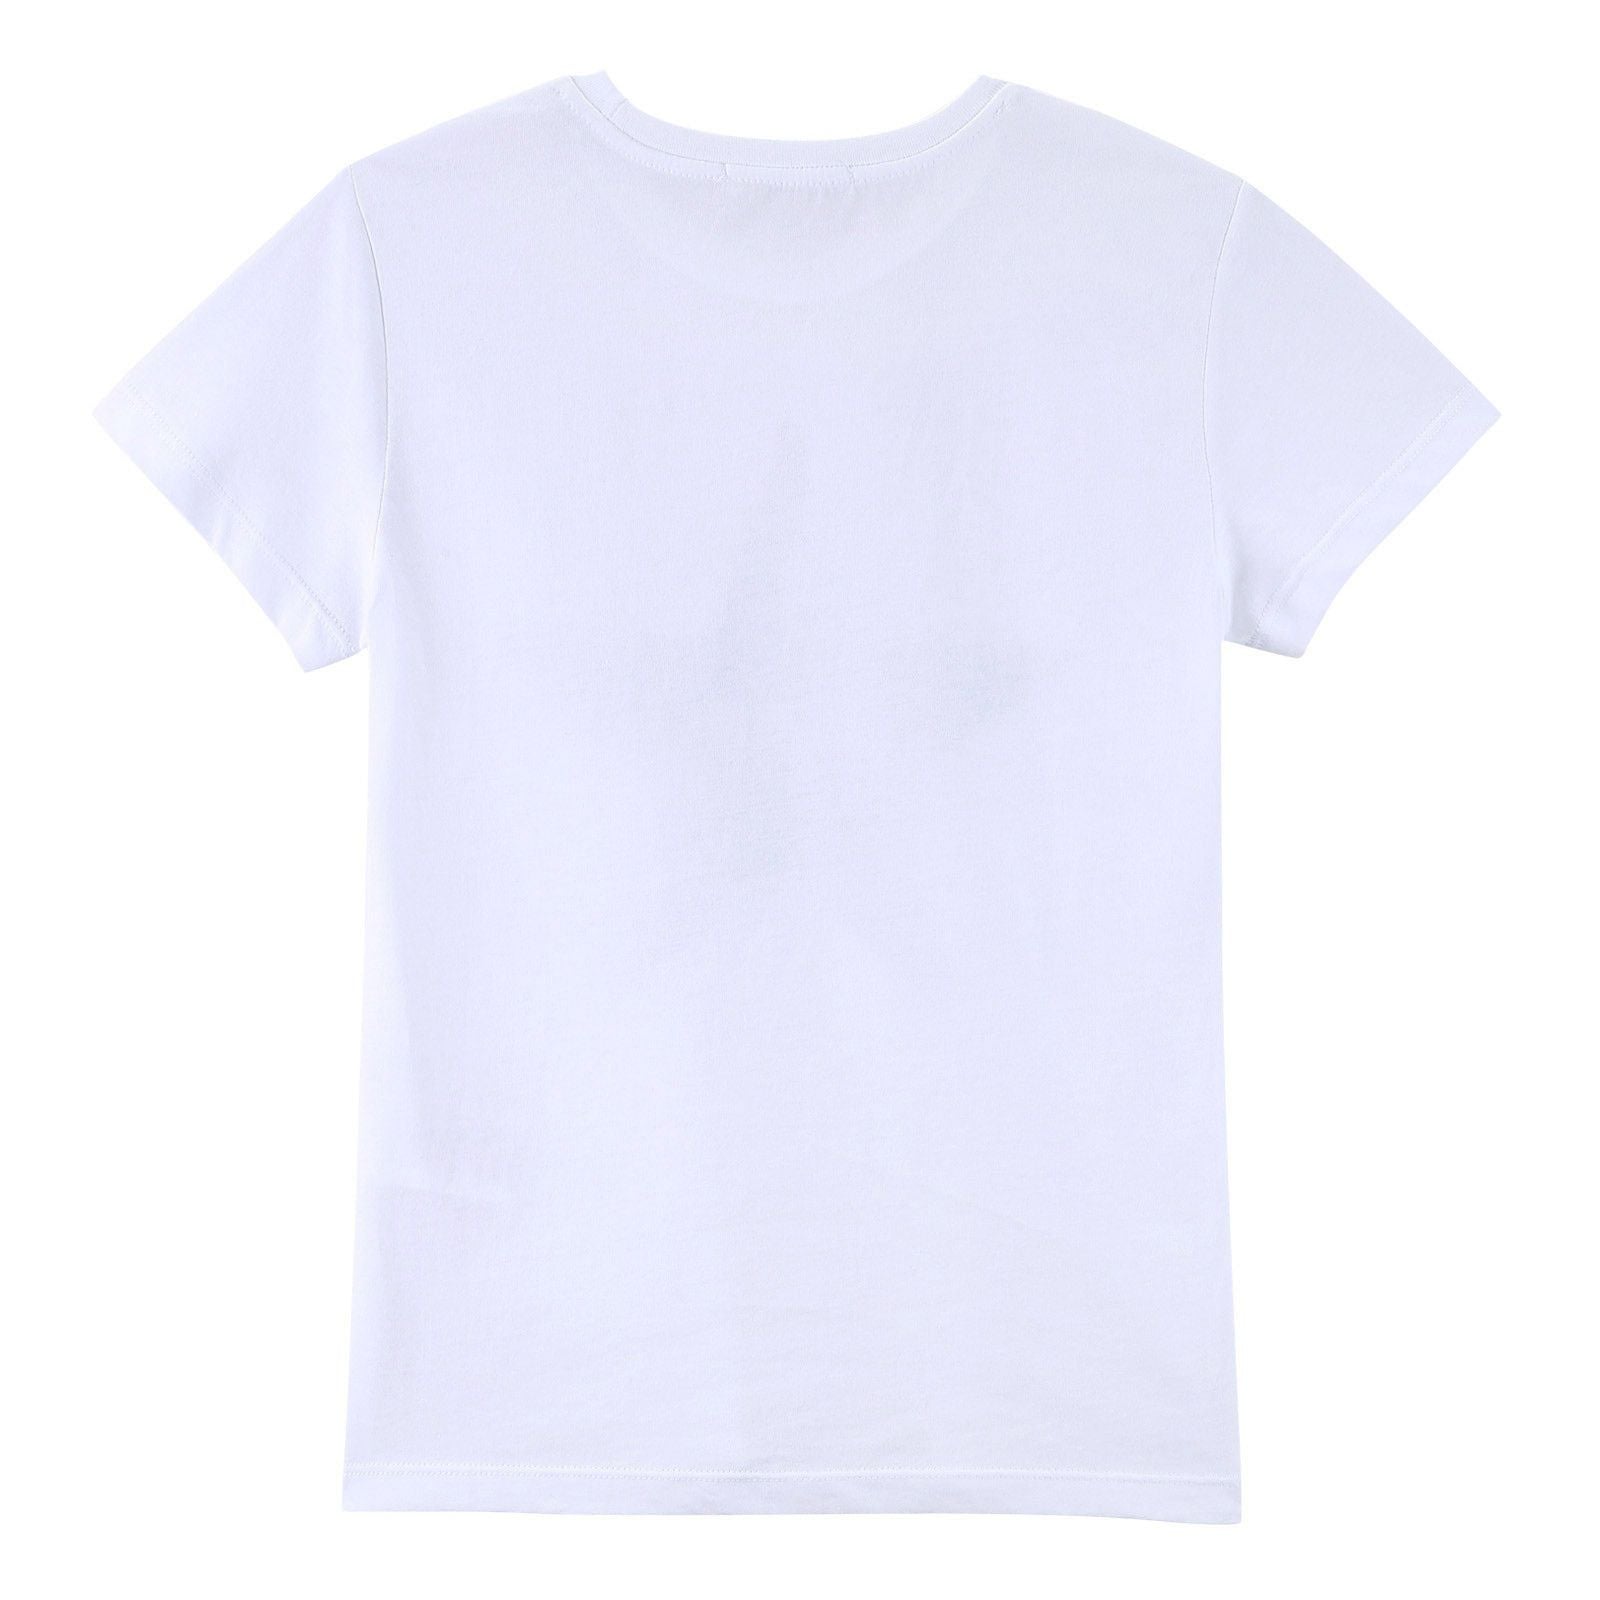 Boys White Cotton Jersey T-Shirt With Black Star Print - CÉMAROSE | Children's Fashion Store - 2